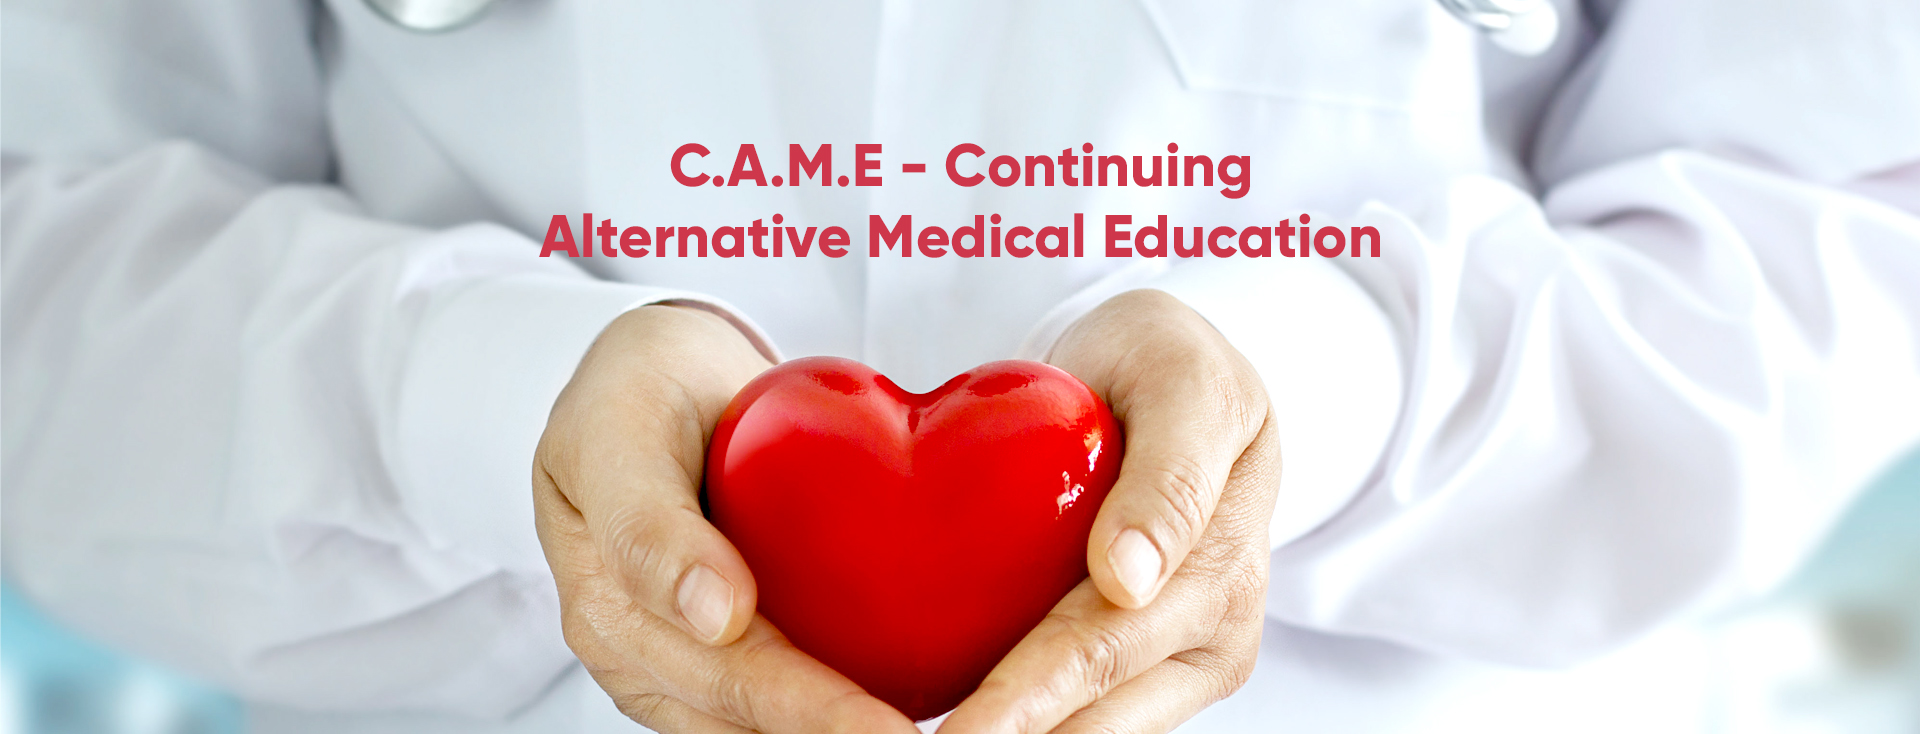 Continuing Alternative Medical Education